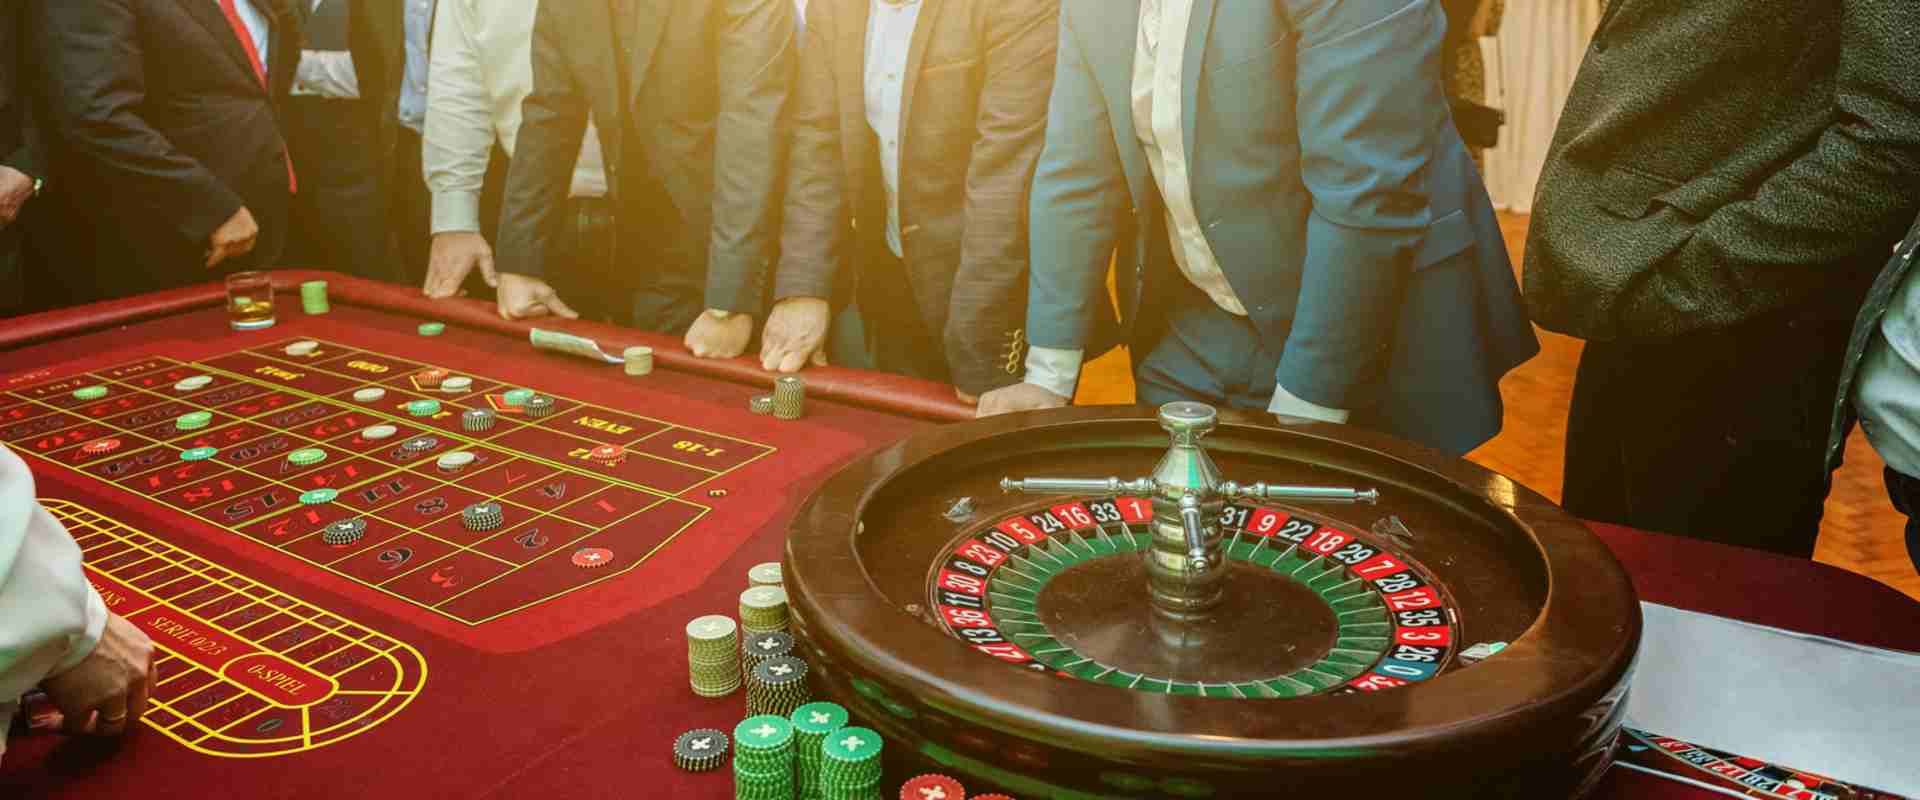 casino gaming industry